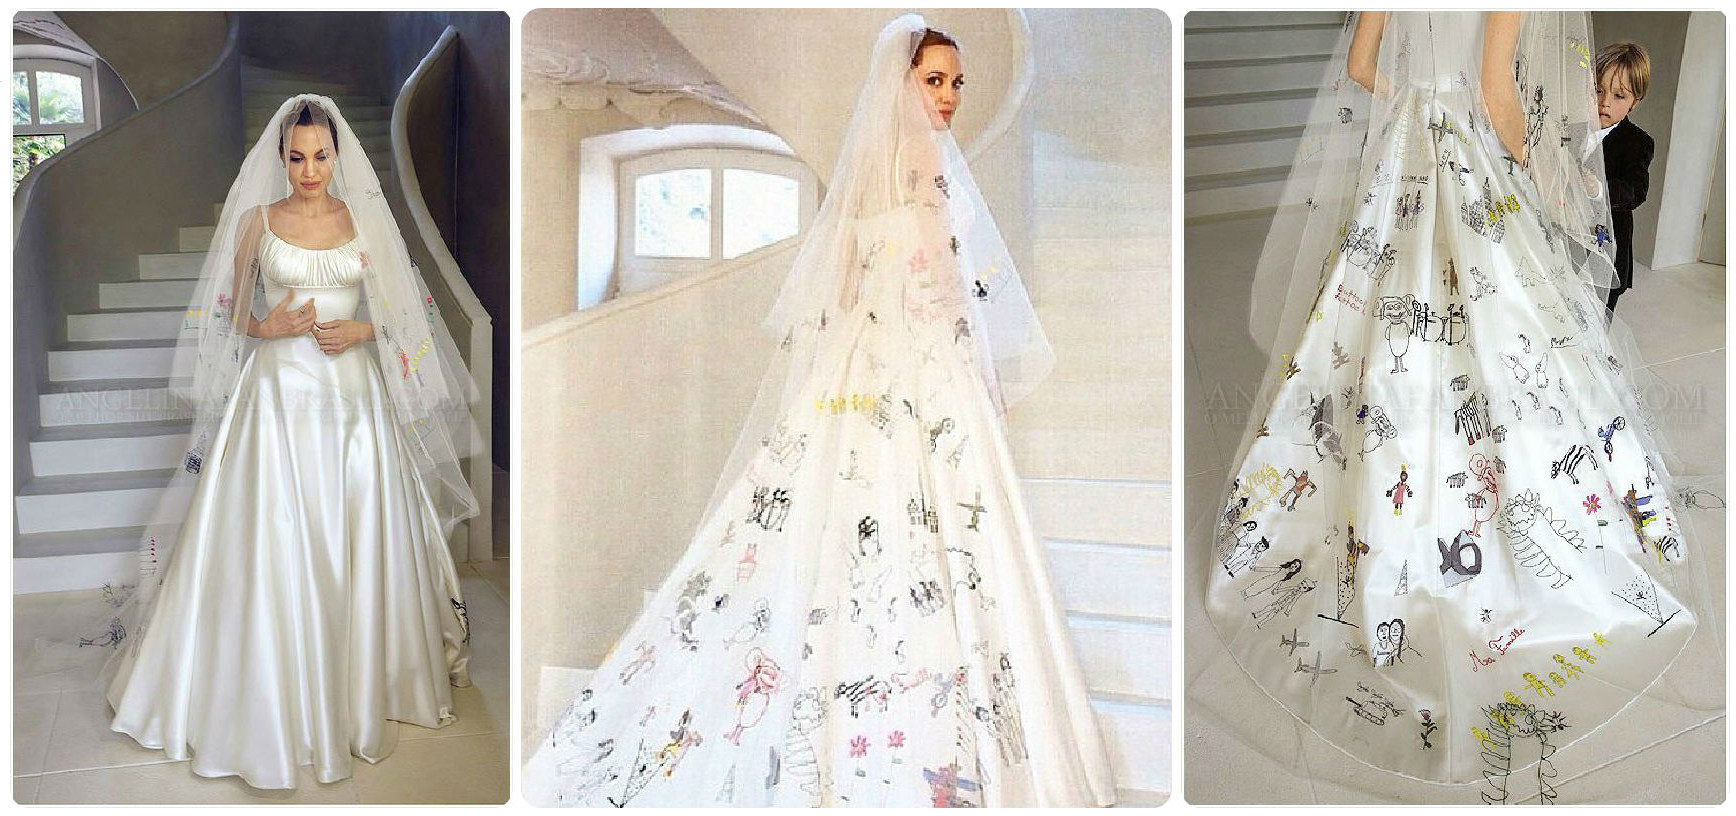 Angelina Wedding Gown
 Make Your Own Customised Wedding Veil Like Angelina Jolie